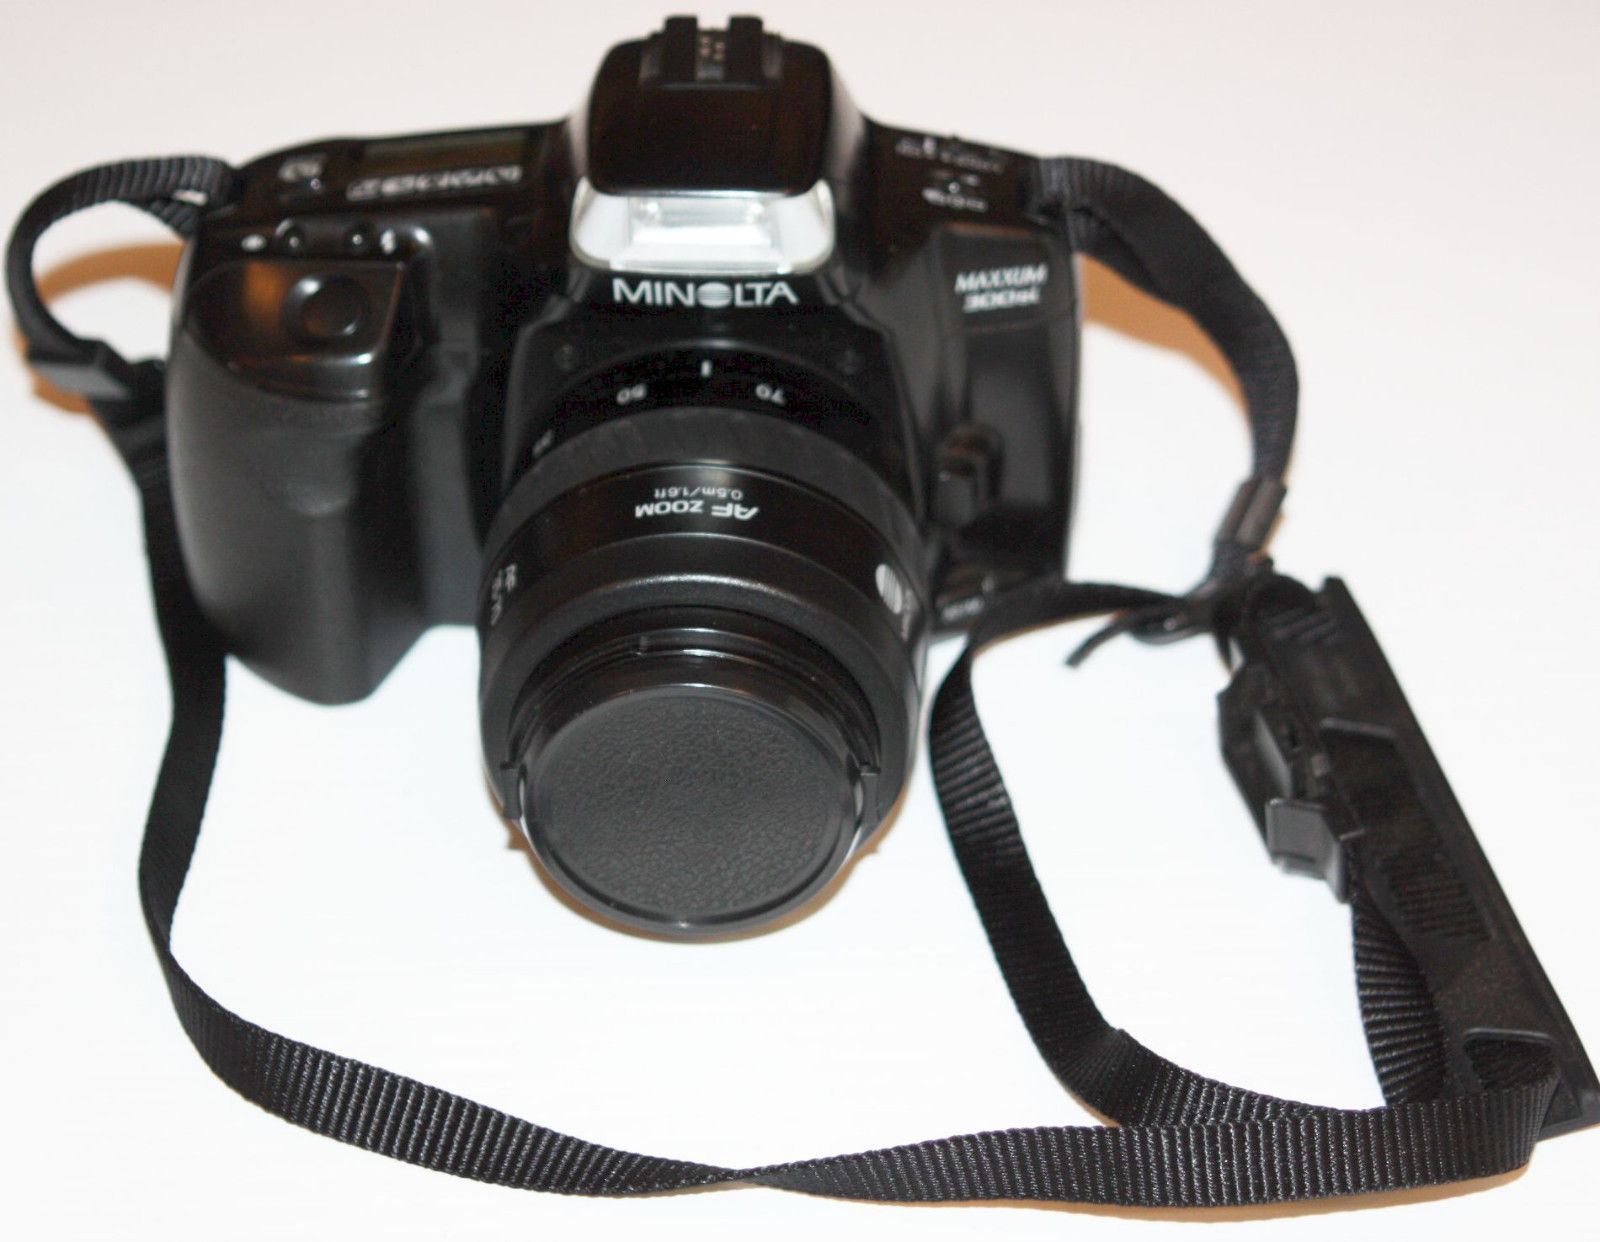 Minolta Maxxum 300SI Auto Focus 35mm Film SLR Camera | eBay